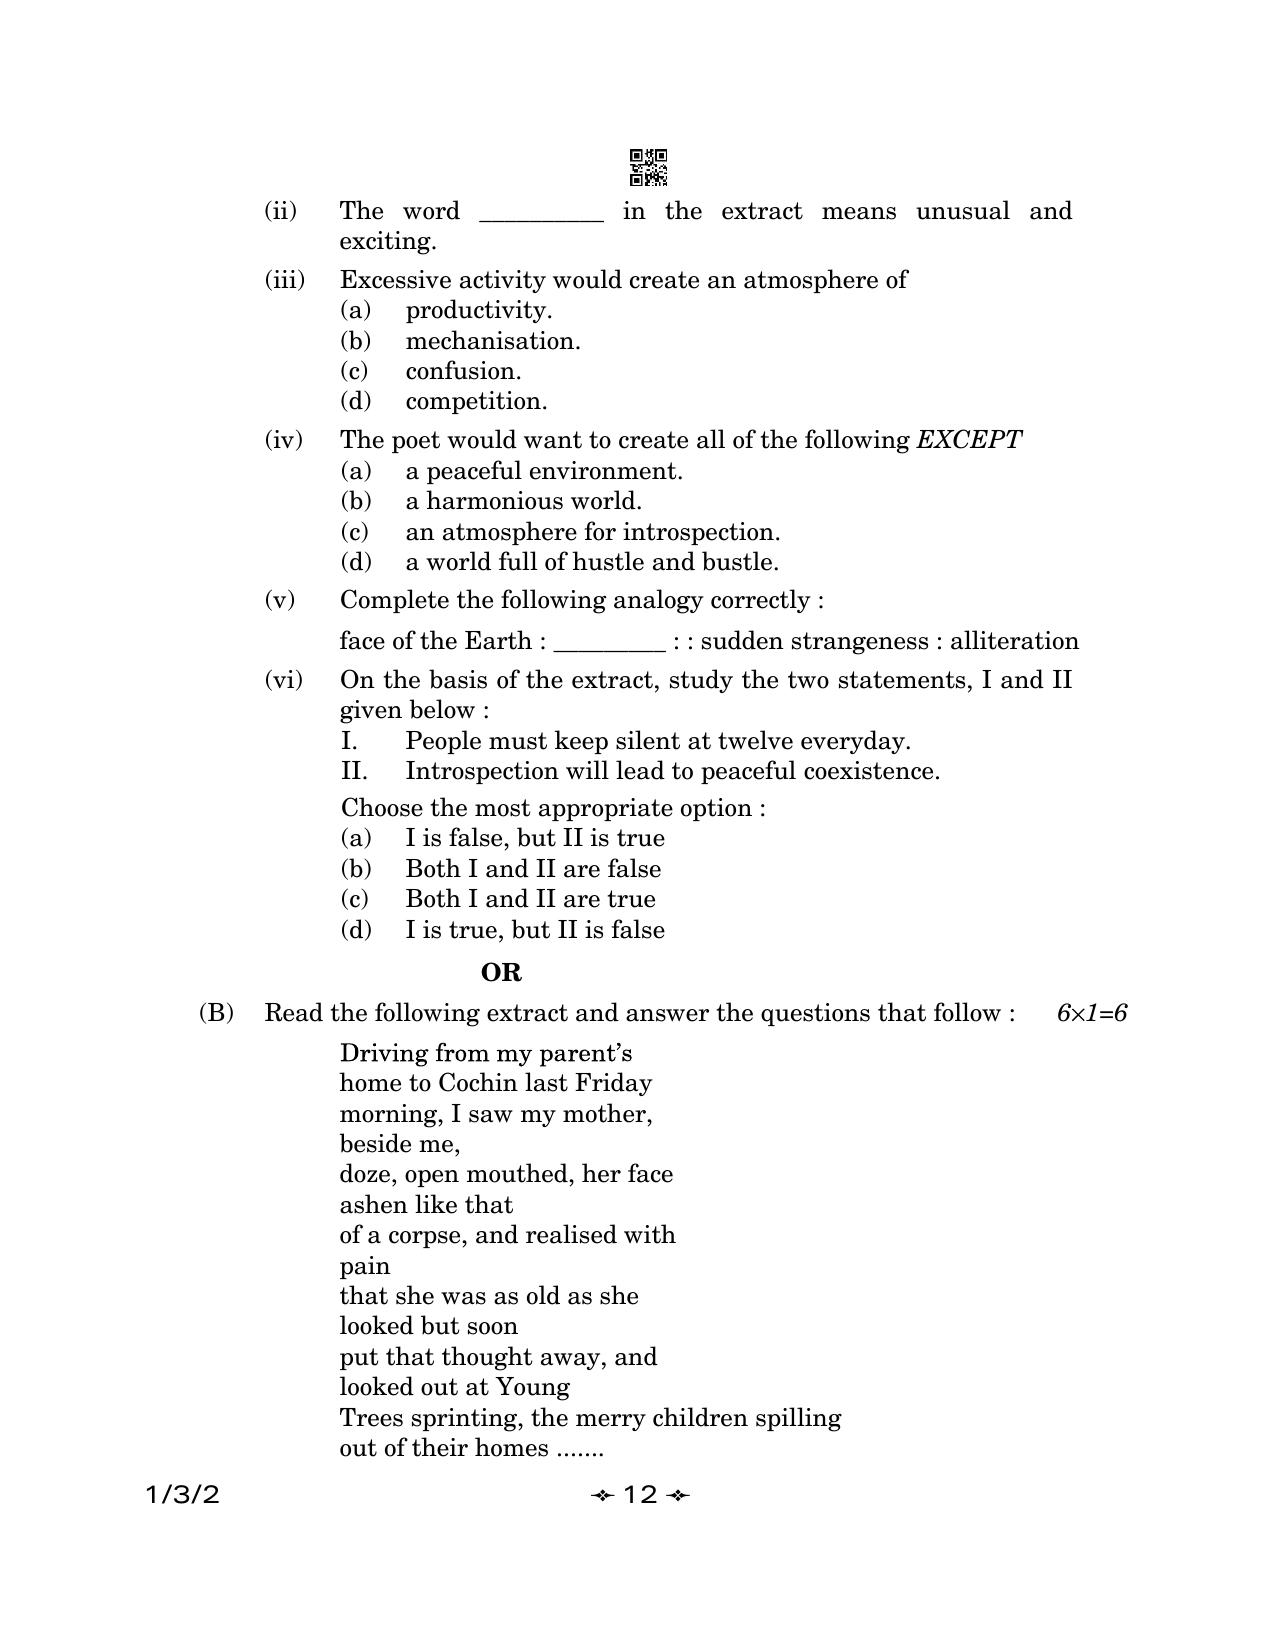 CBSE Class 12 1-3-2 English Core 2023 Question Paper - Page 12